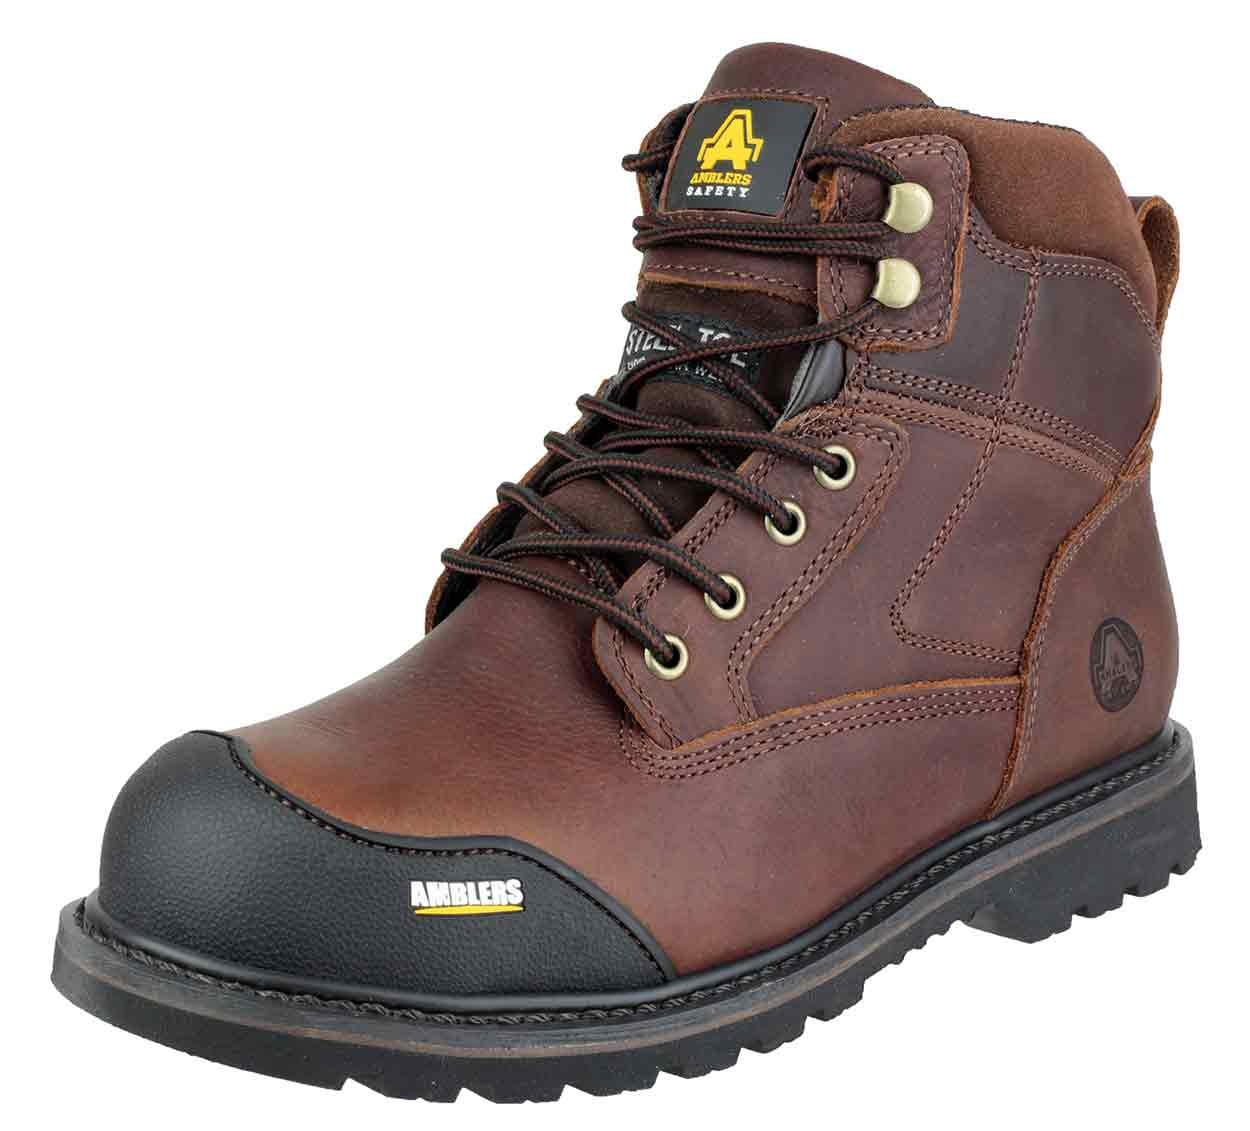 Amblers FS167 Full Grain Goodyear Welted Safety Boot - Standard Safety  Boots - Mens Safety Boots & Shoes - Safety Footwear - Best Workwear